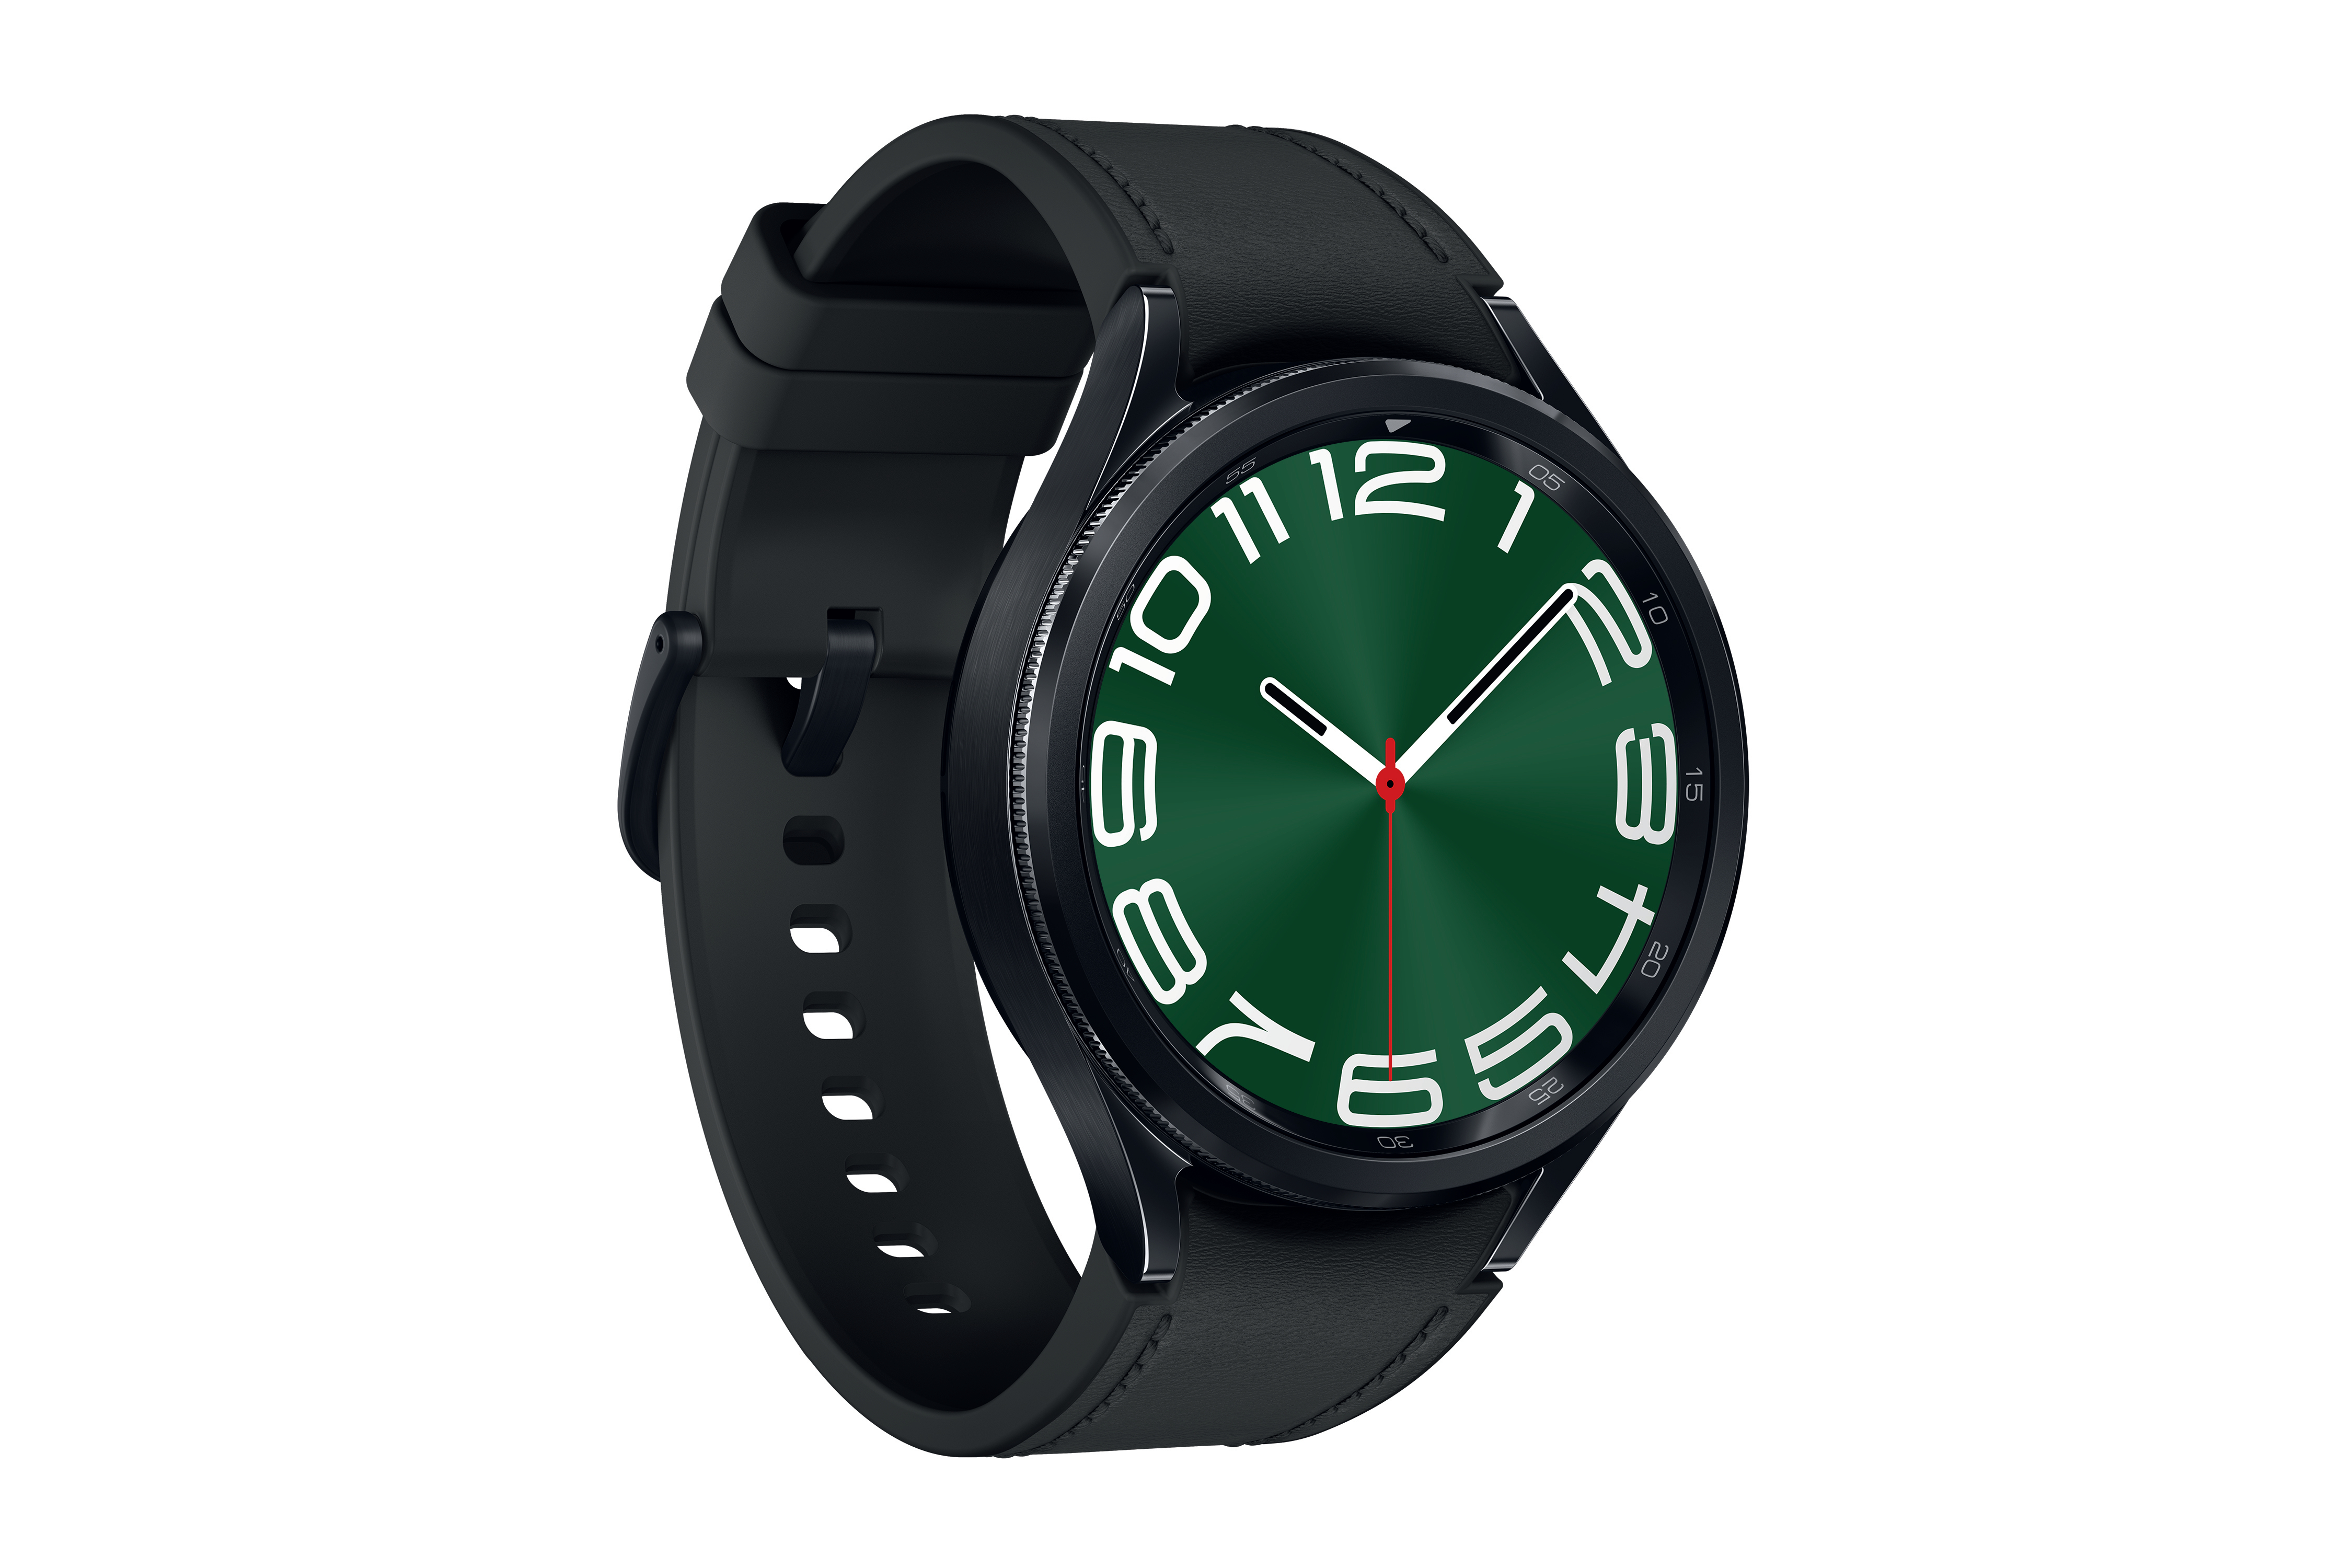 47 Smartwatch Classic Watch6 Galaxy Black SAMSUNG mm Kunstleder, M/L,